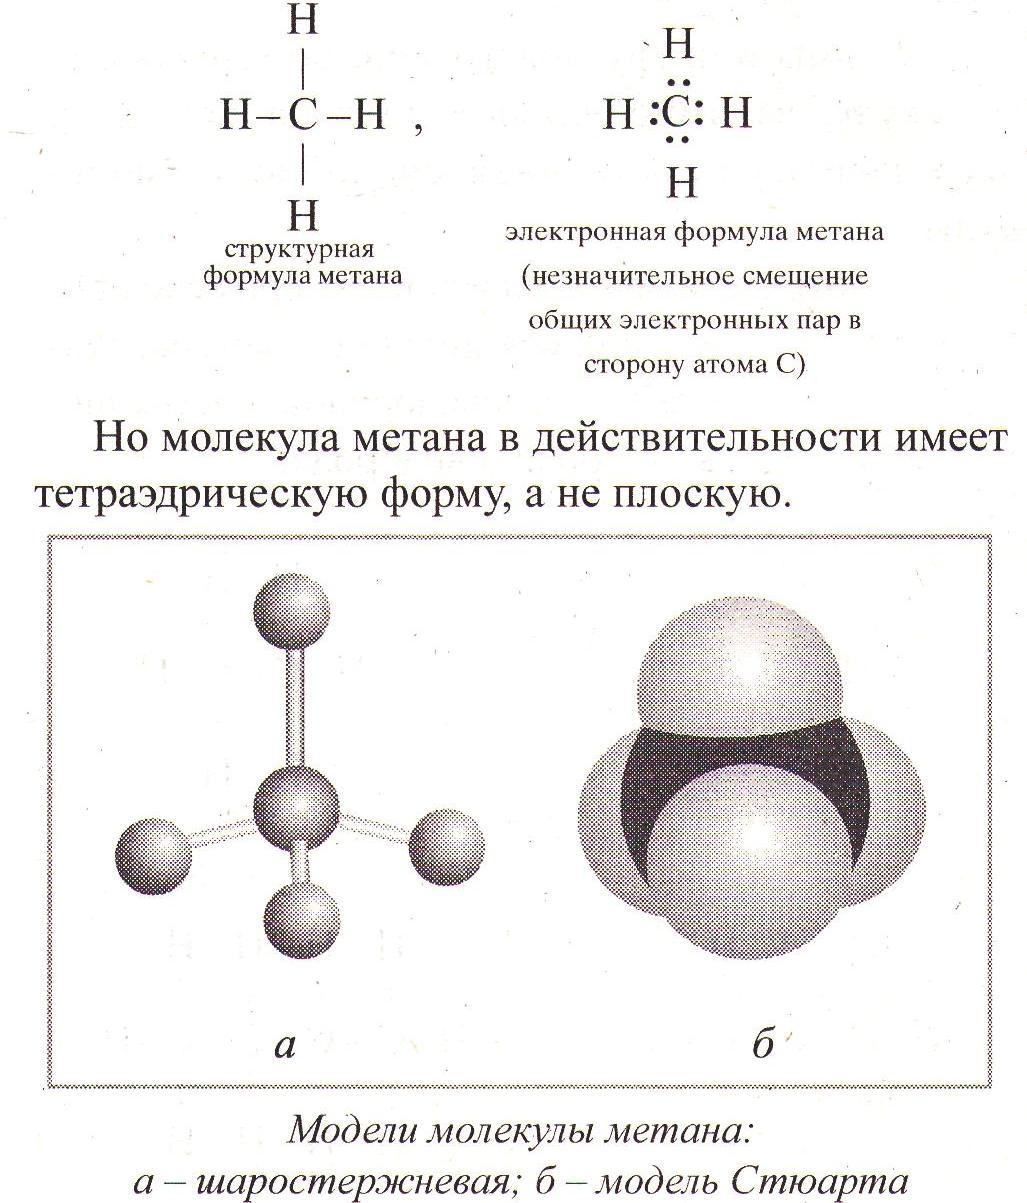 Метан углерод формула. Тетраэдрическая форма молекулы метана. Электронные формулы шаростержневые модели молекулы метана. Строение метана электронная формула. Скелетная формула метана.